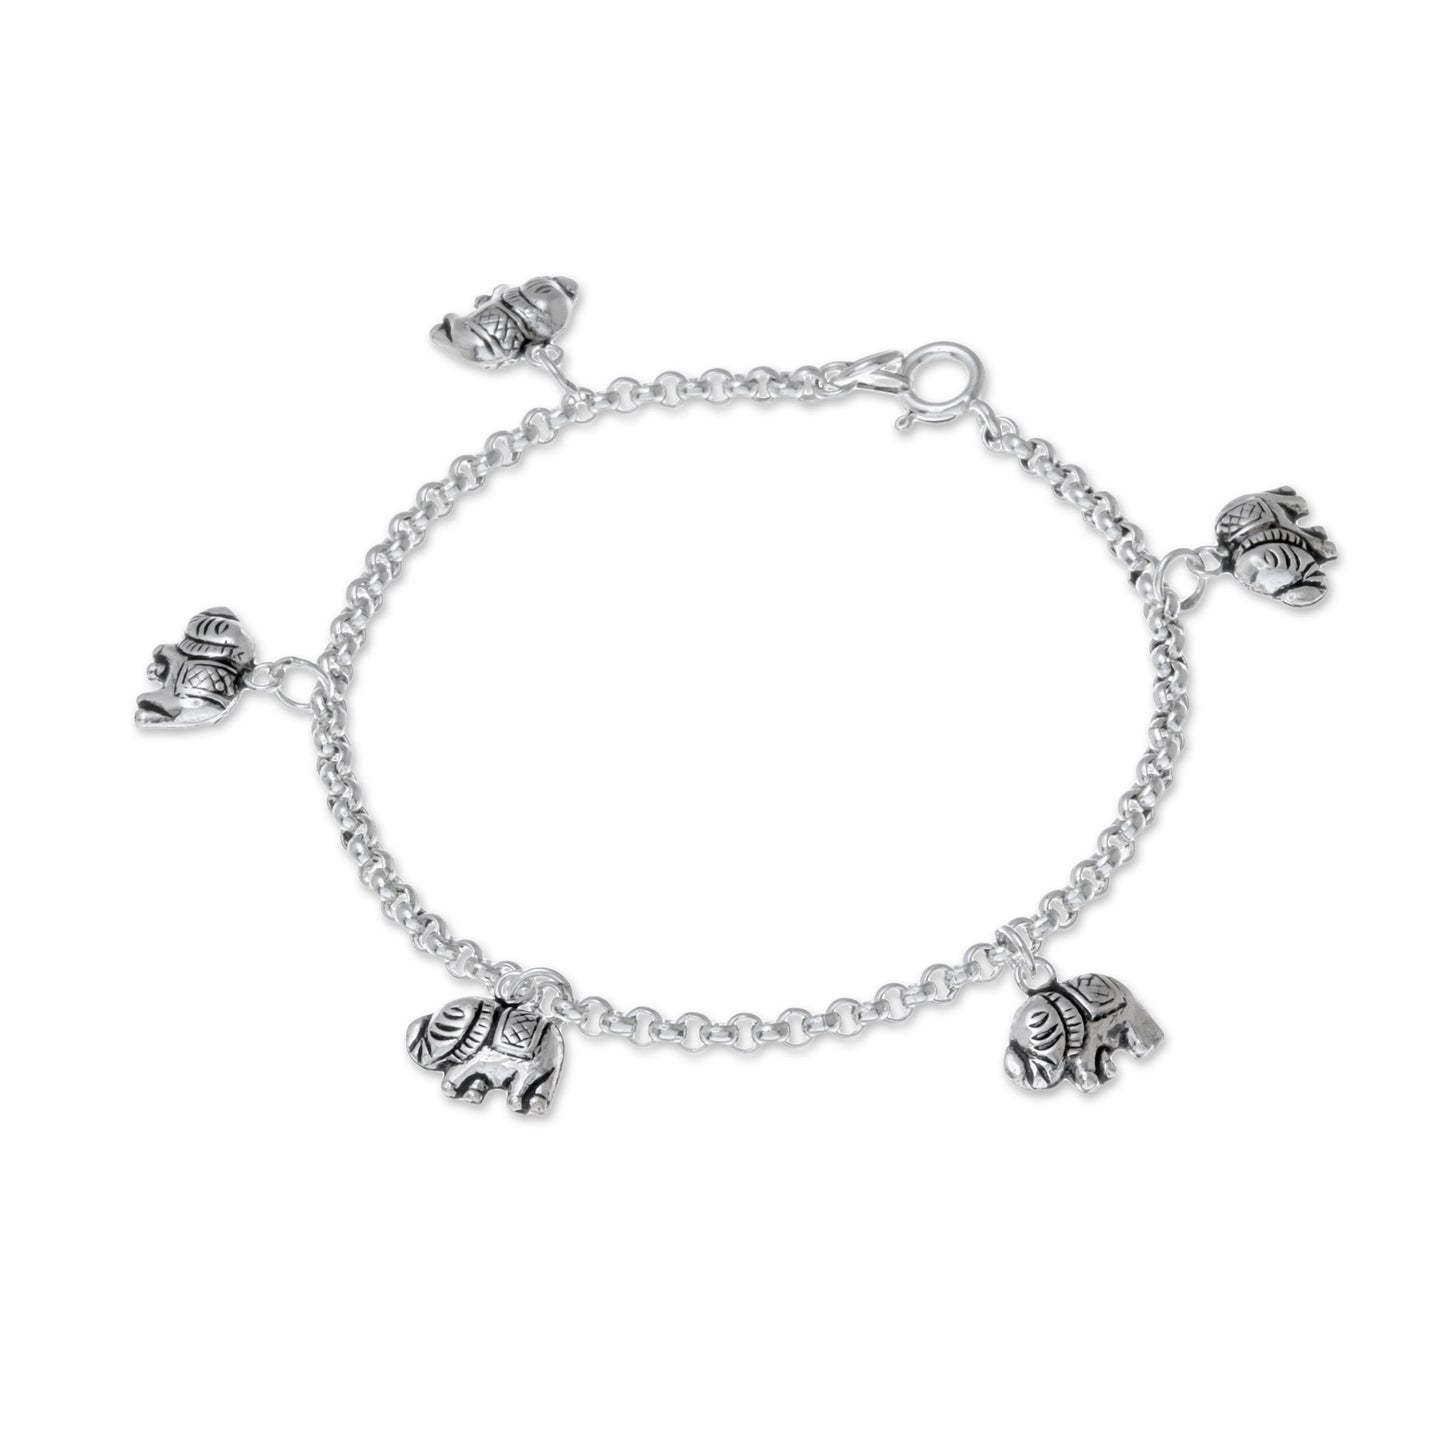 Elephant Marvel Sterling Silver Elephant Charm Bracelet from Thailand